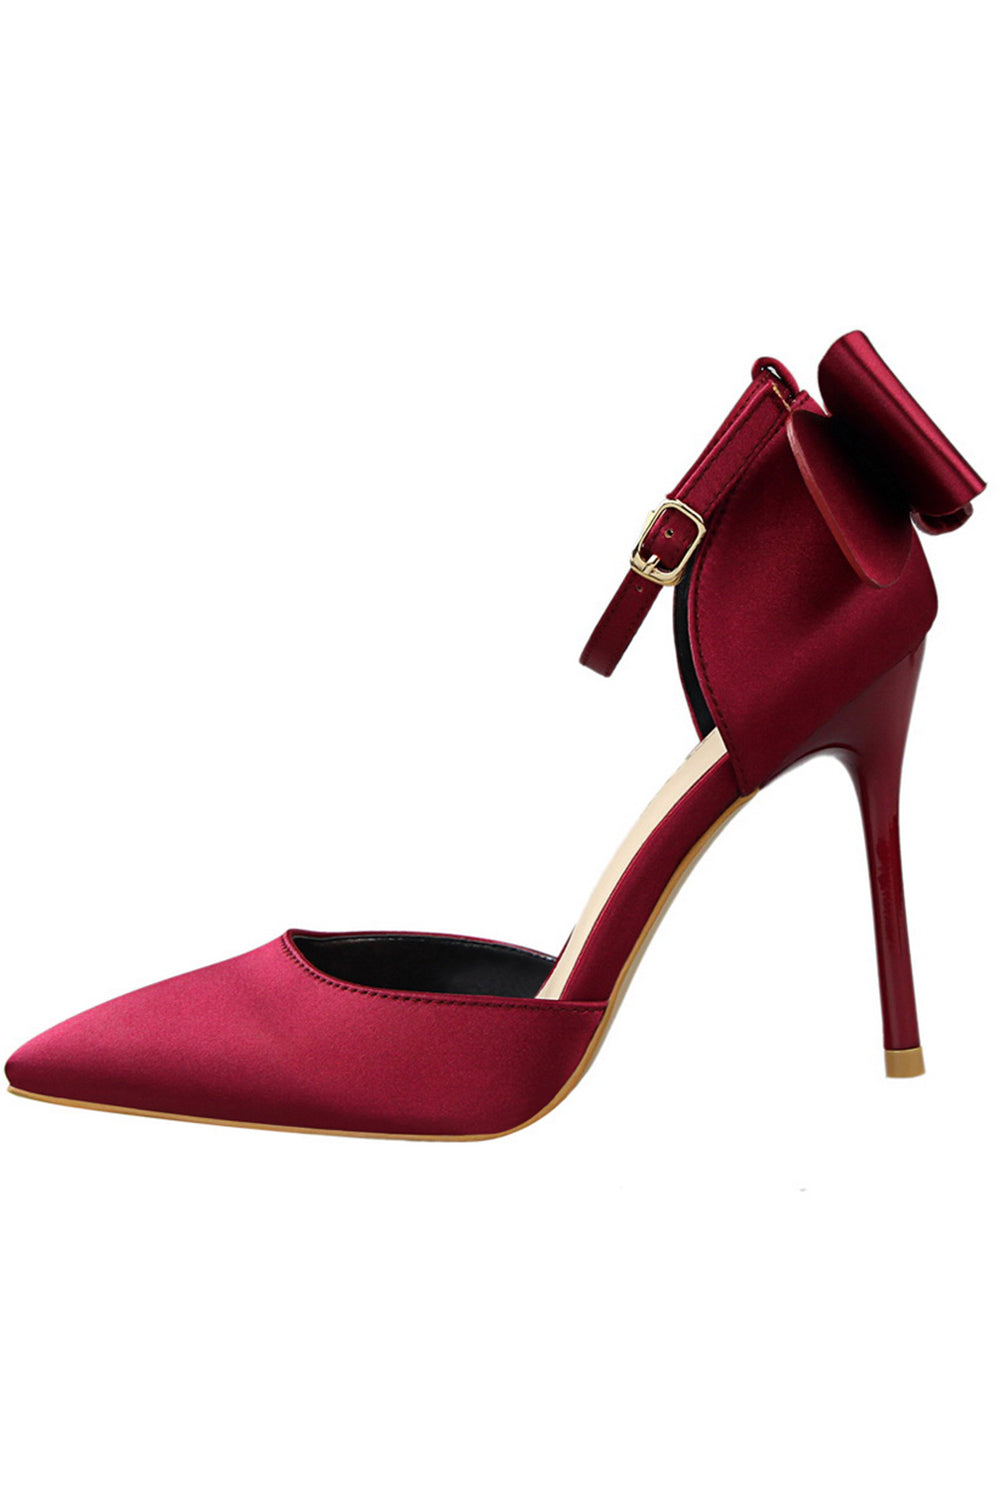 Glitter heels Rene Caovilla Burgundy size 36 IT in Glitter - 39103471